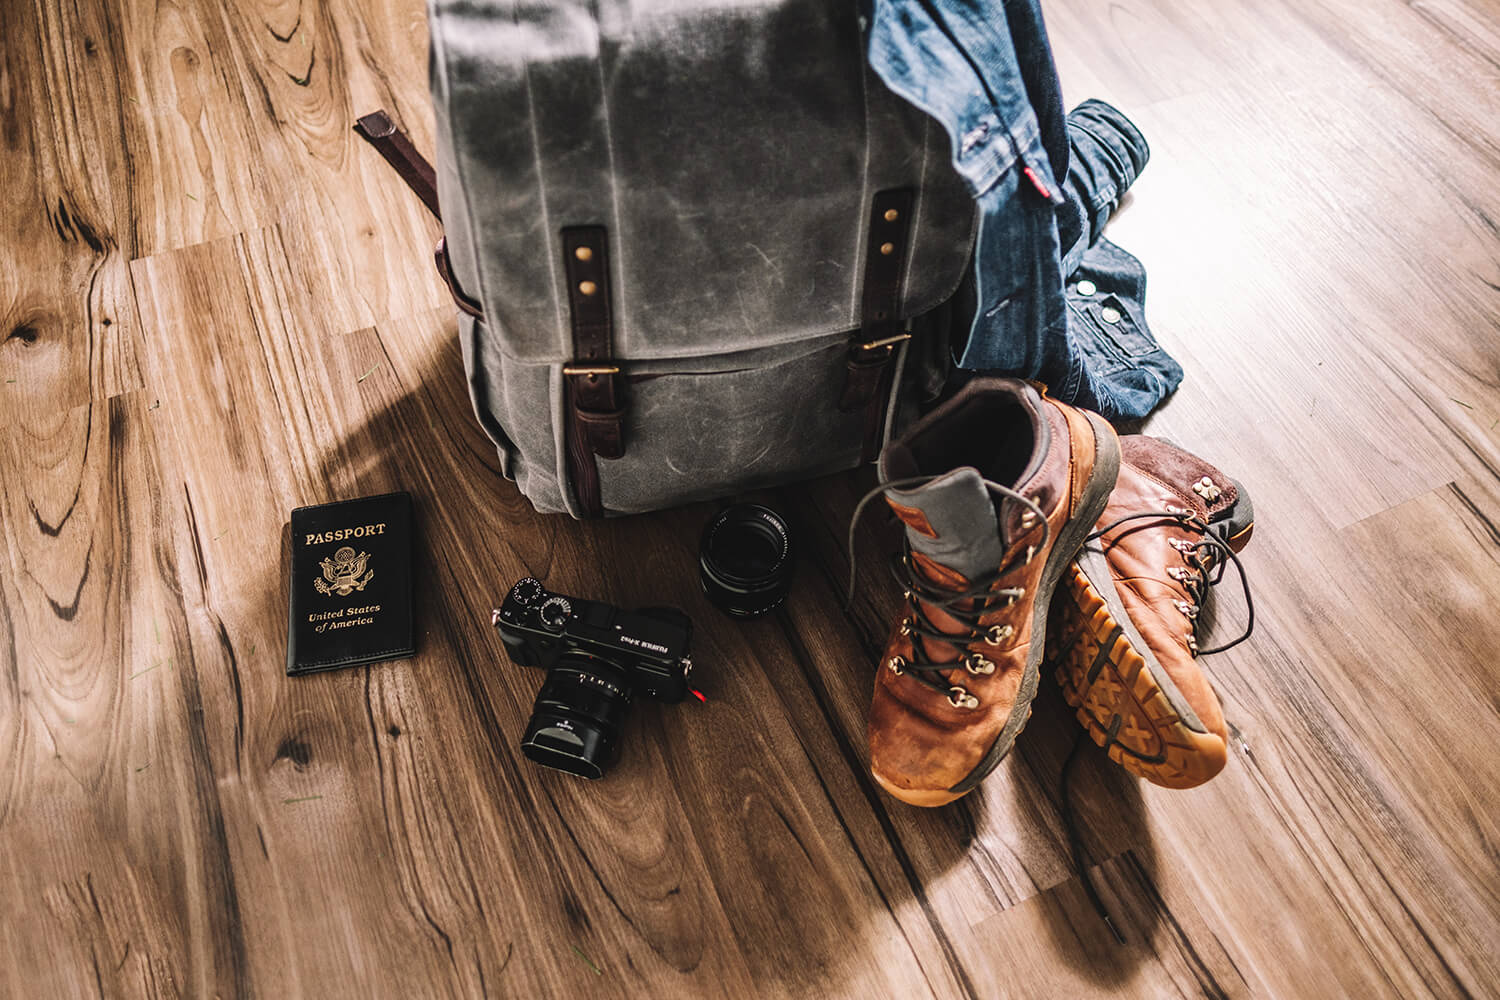 FUJIFILM Exposure Center. Image of packed bag, denim jacket, walking boots and passport on wooden floor.